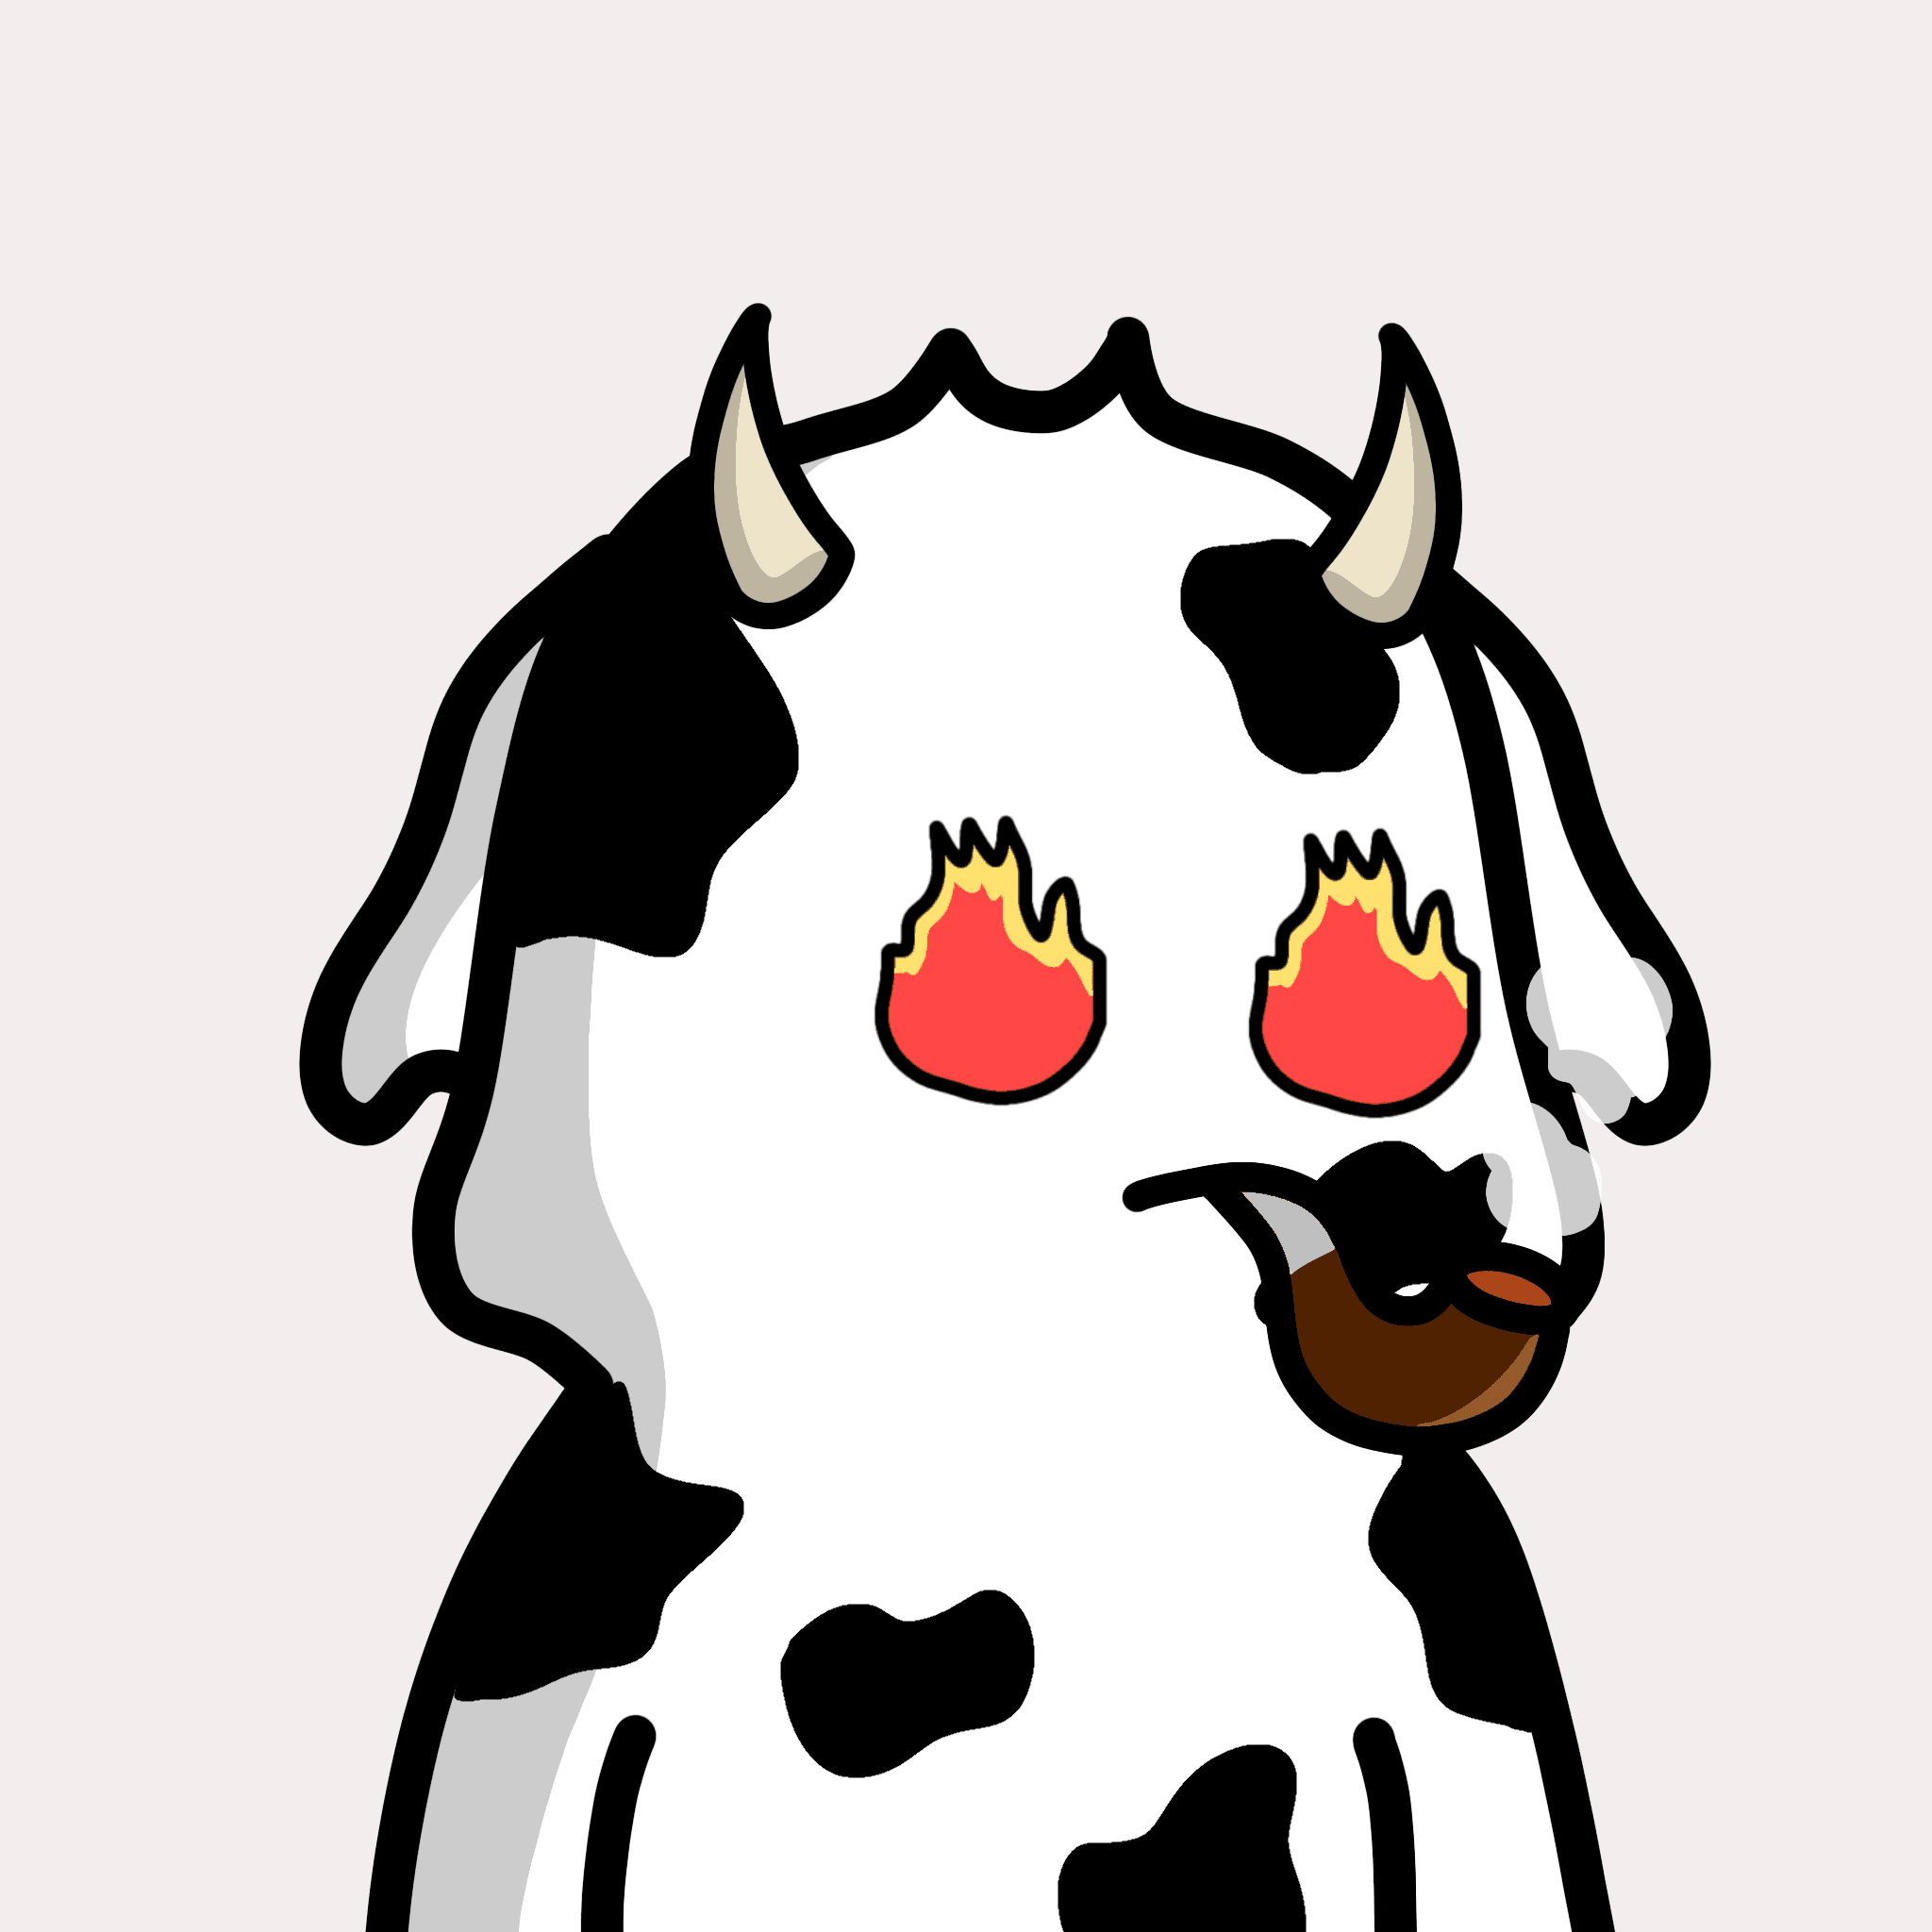 Meta Cows#0013